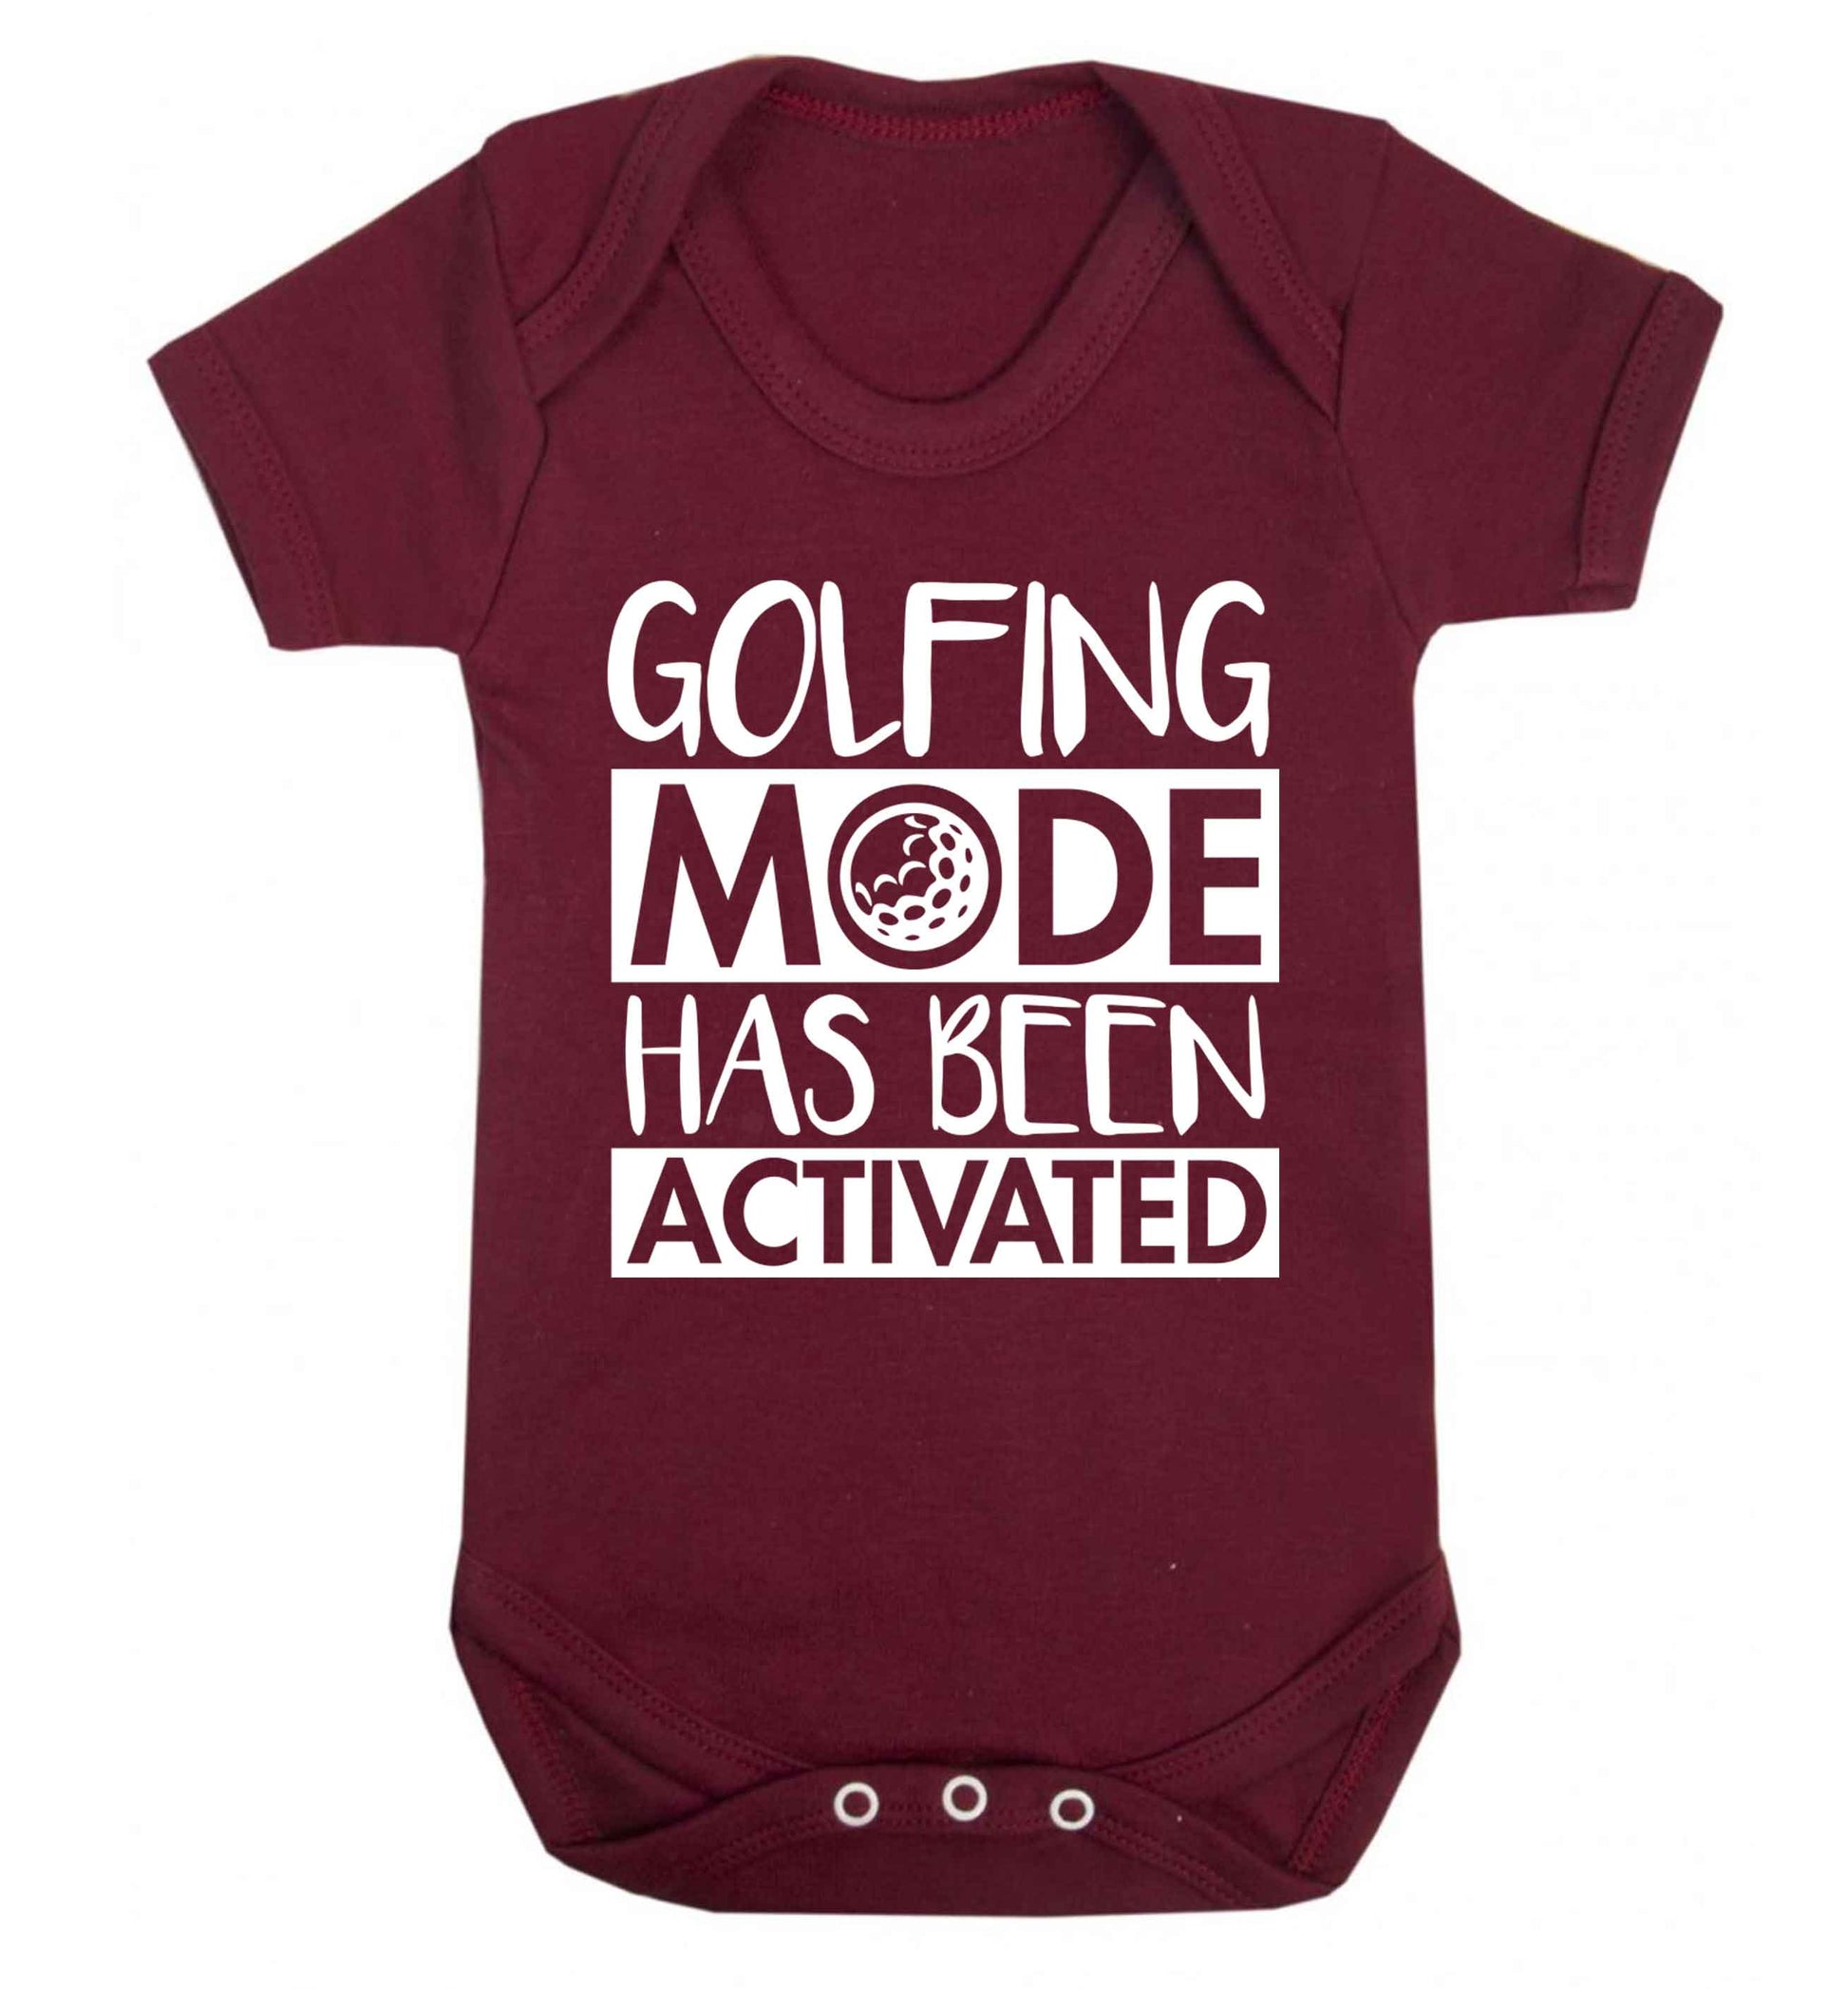 Golfing mode has been activated Baby Vest maroon 18-24 months